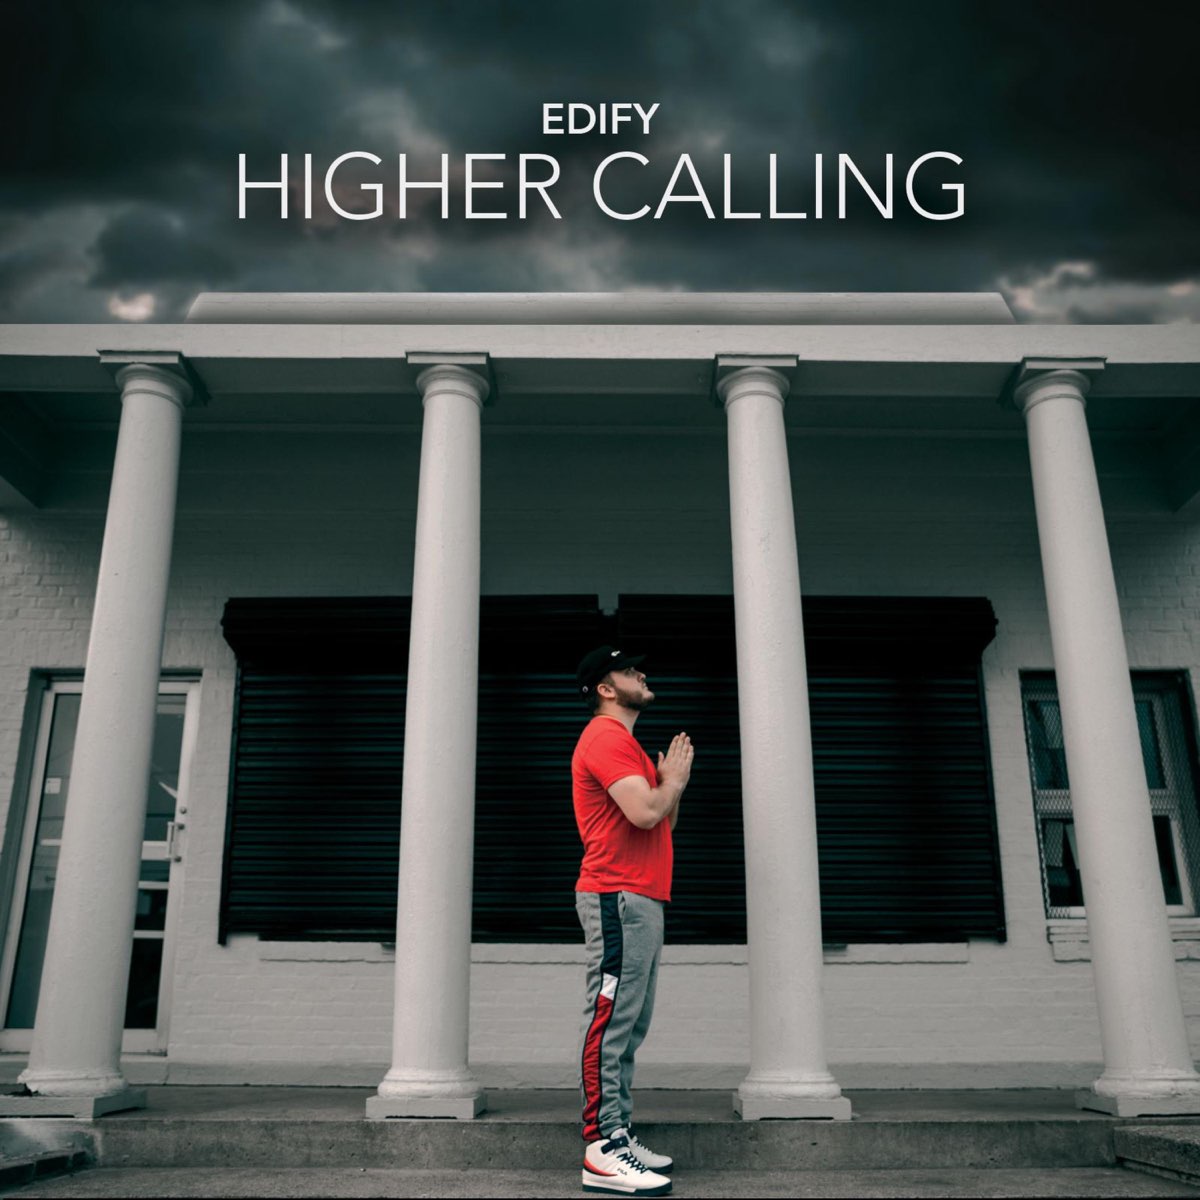 Higher calling. Edify.